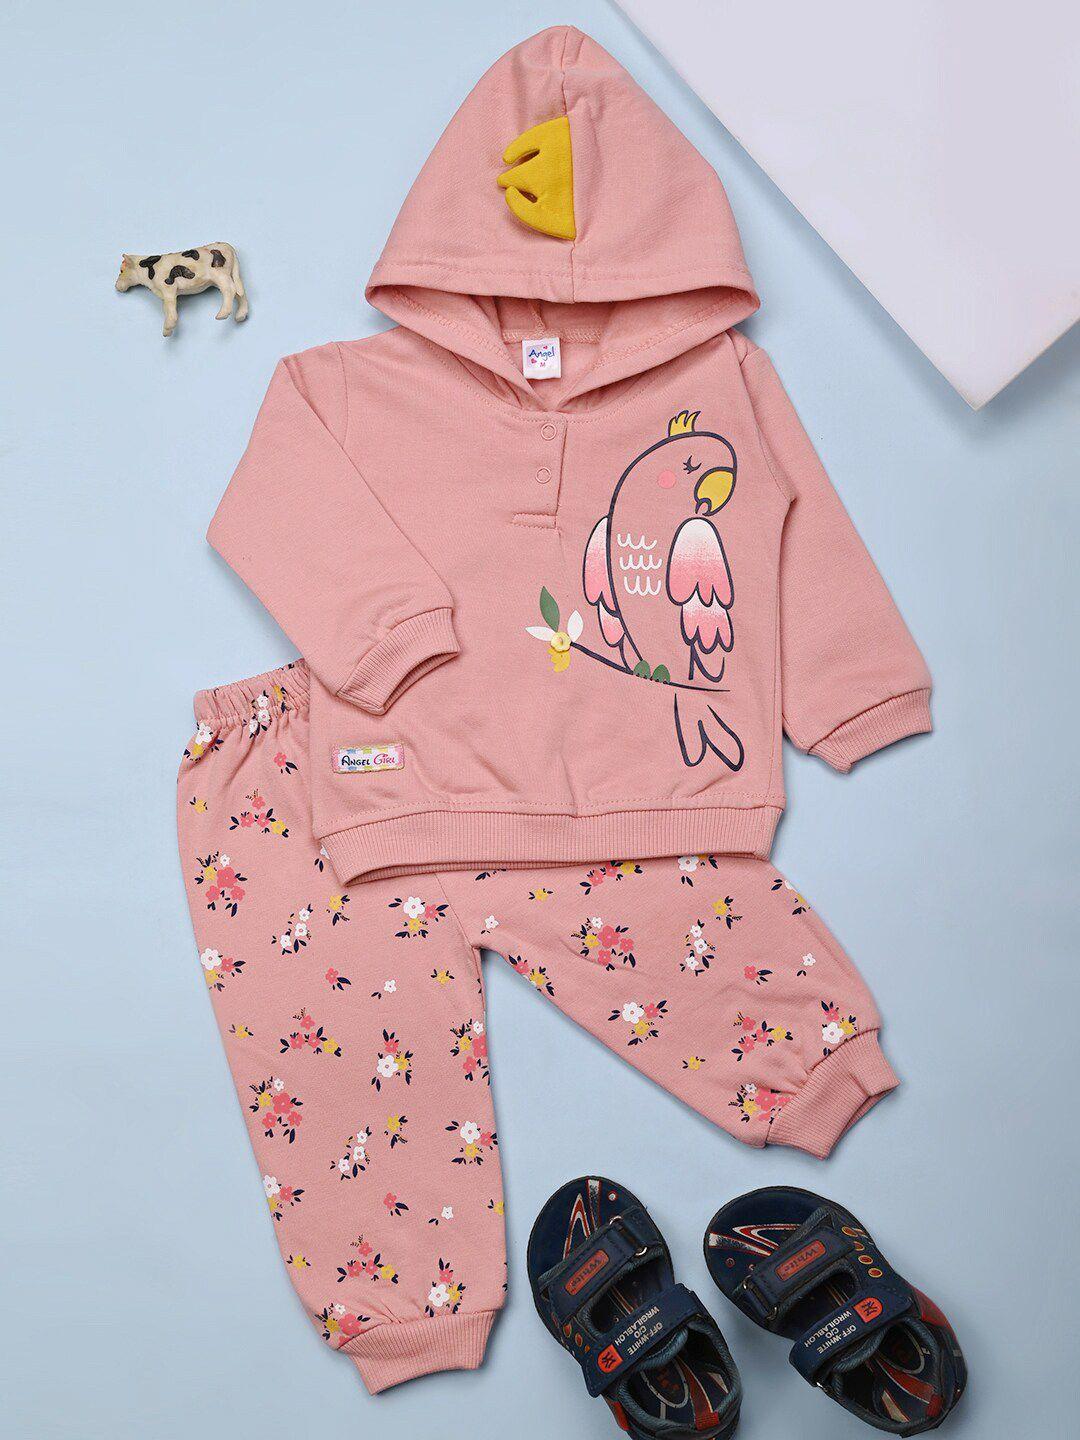 v-mart infants printed hooded pure cotton clothing set